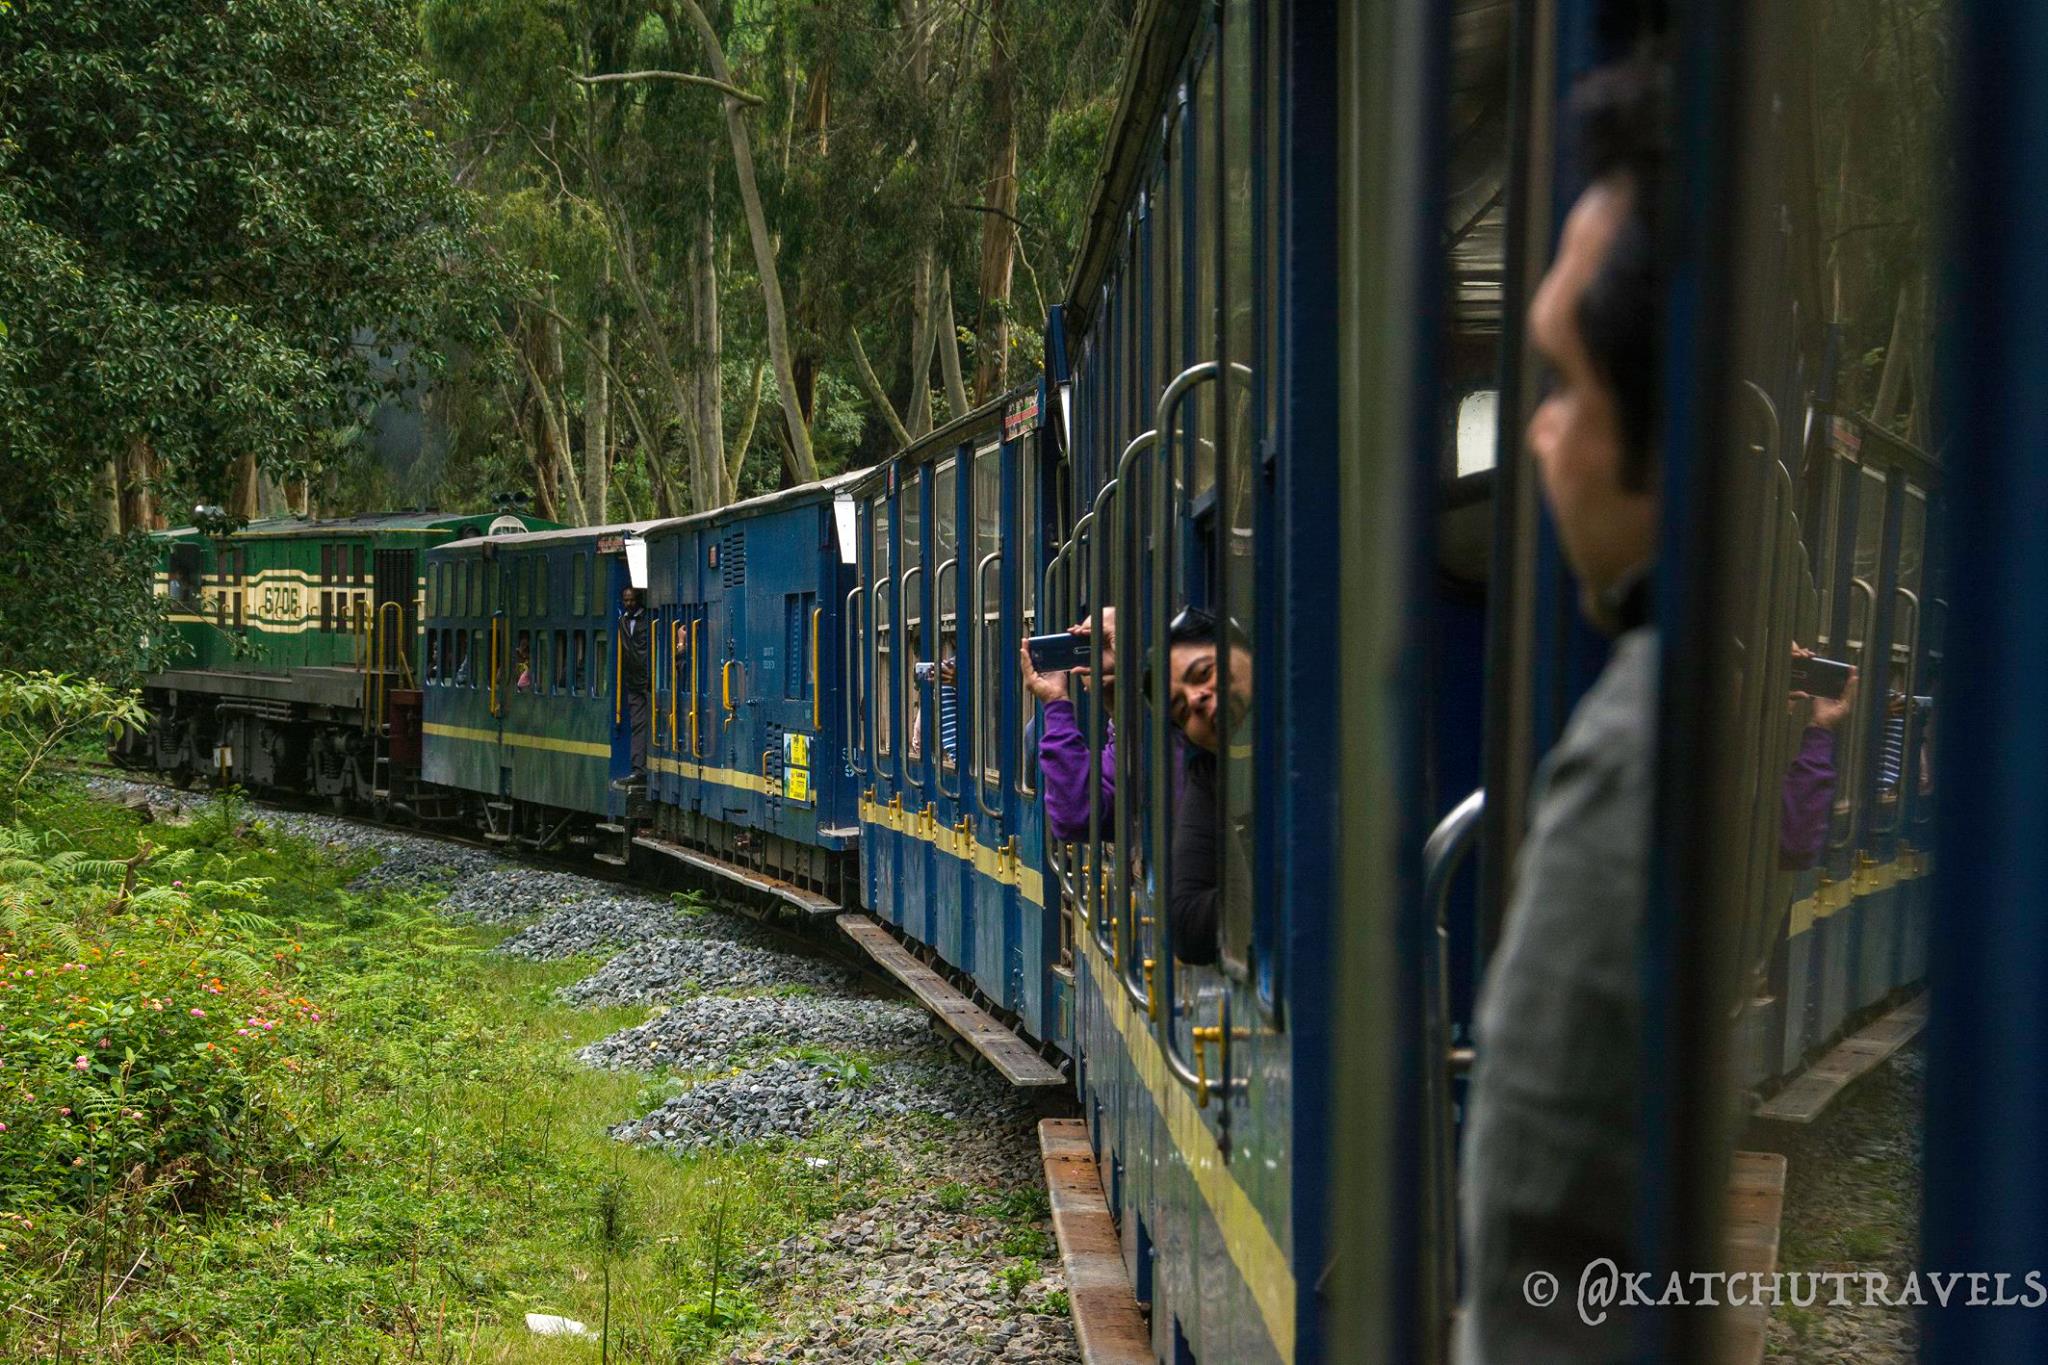 On the Nilgiri Mountain Railway Toy Train from Coonoor to Udhagamandalam